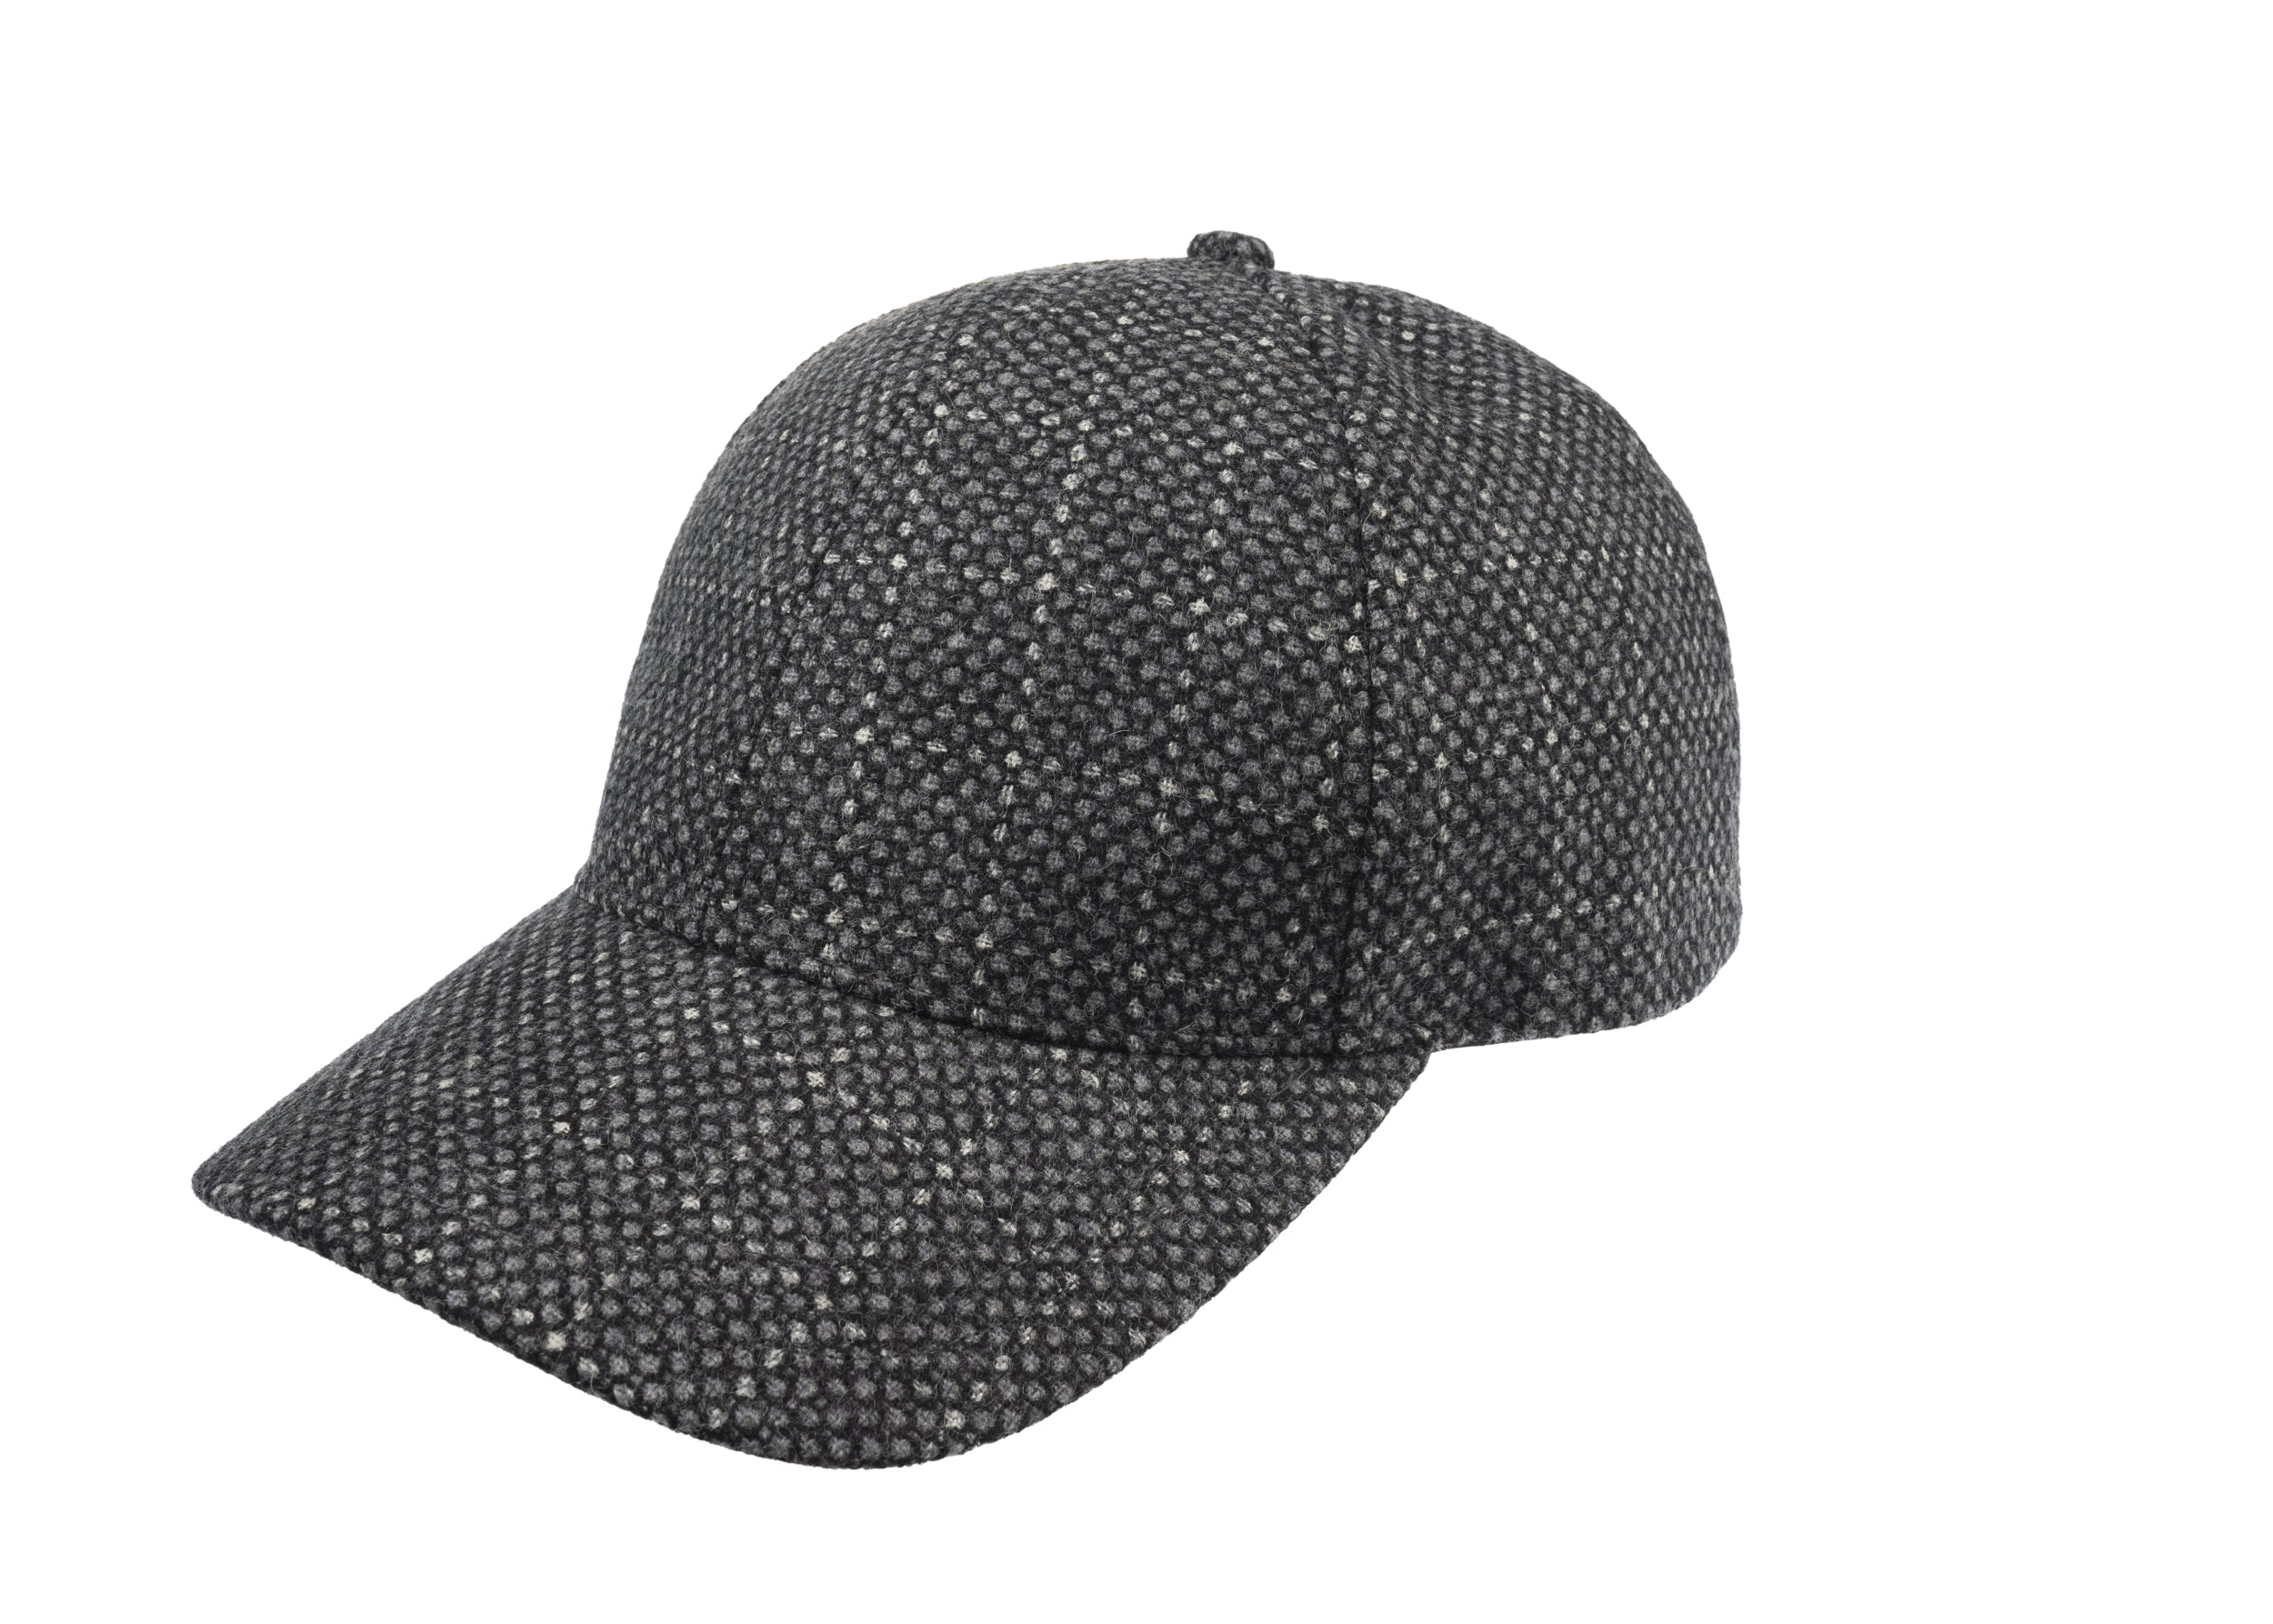 Grey Reflective Tweed Baseball Cap with one size adjuster